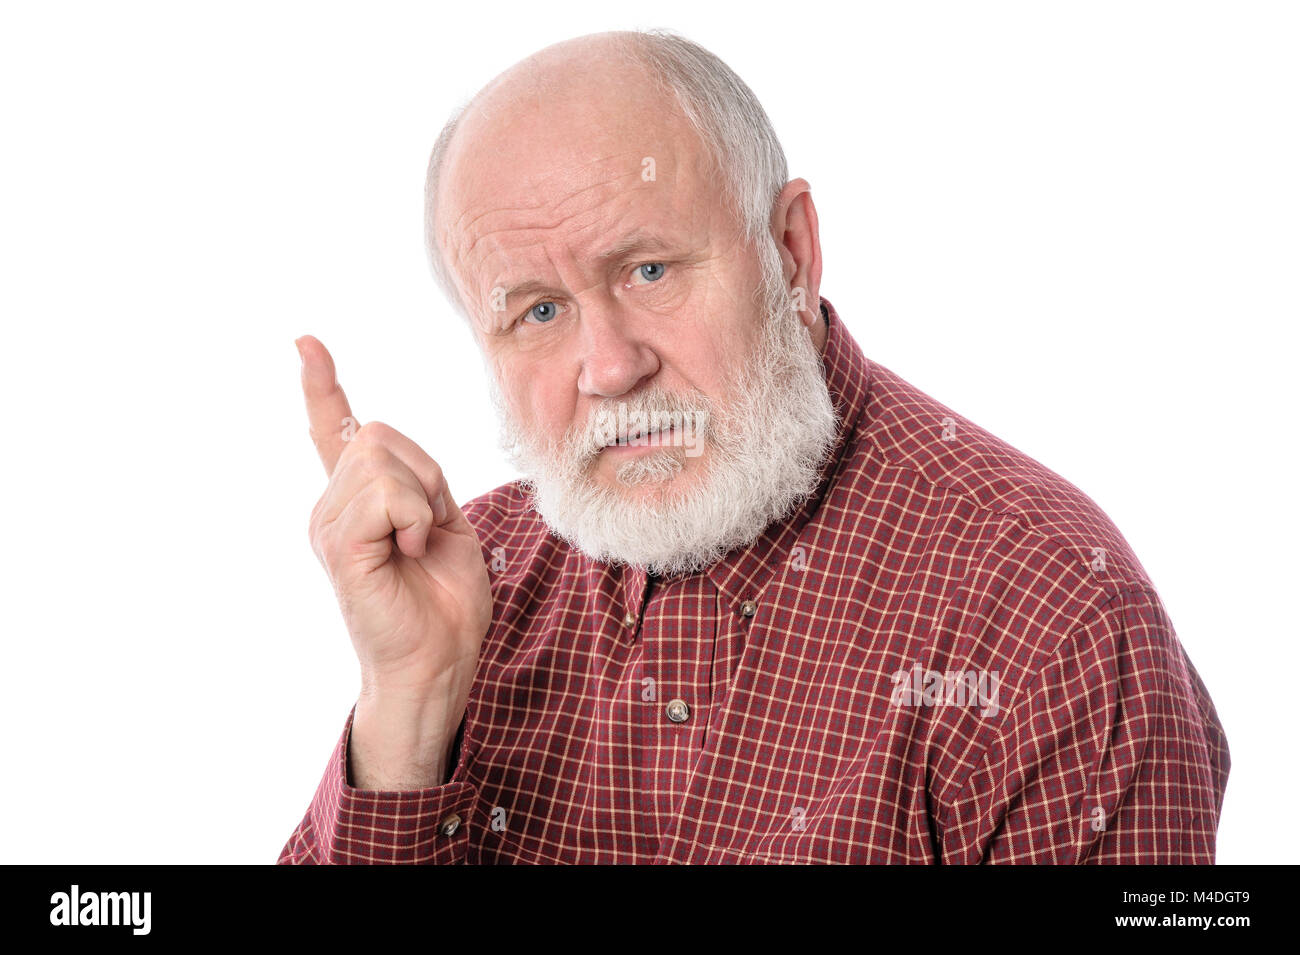 Senior man shows forefinger gesture, isolated on white Stock Photo